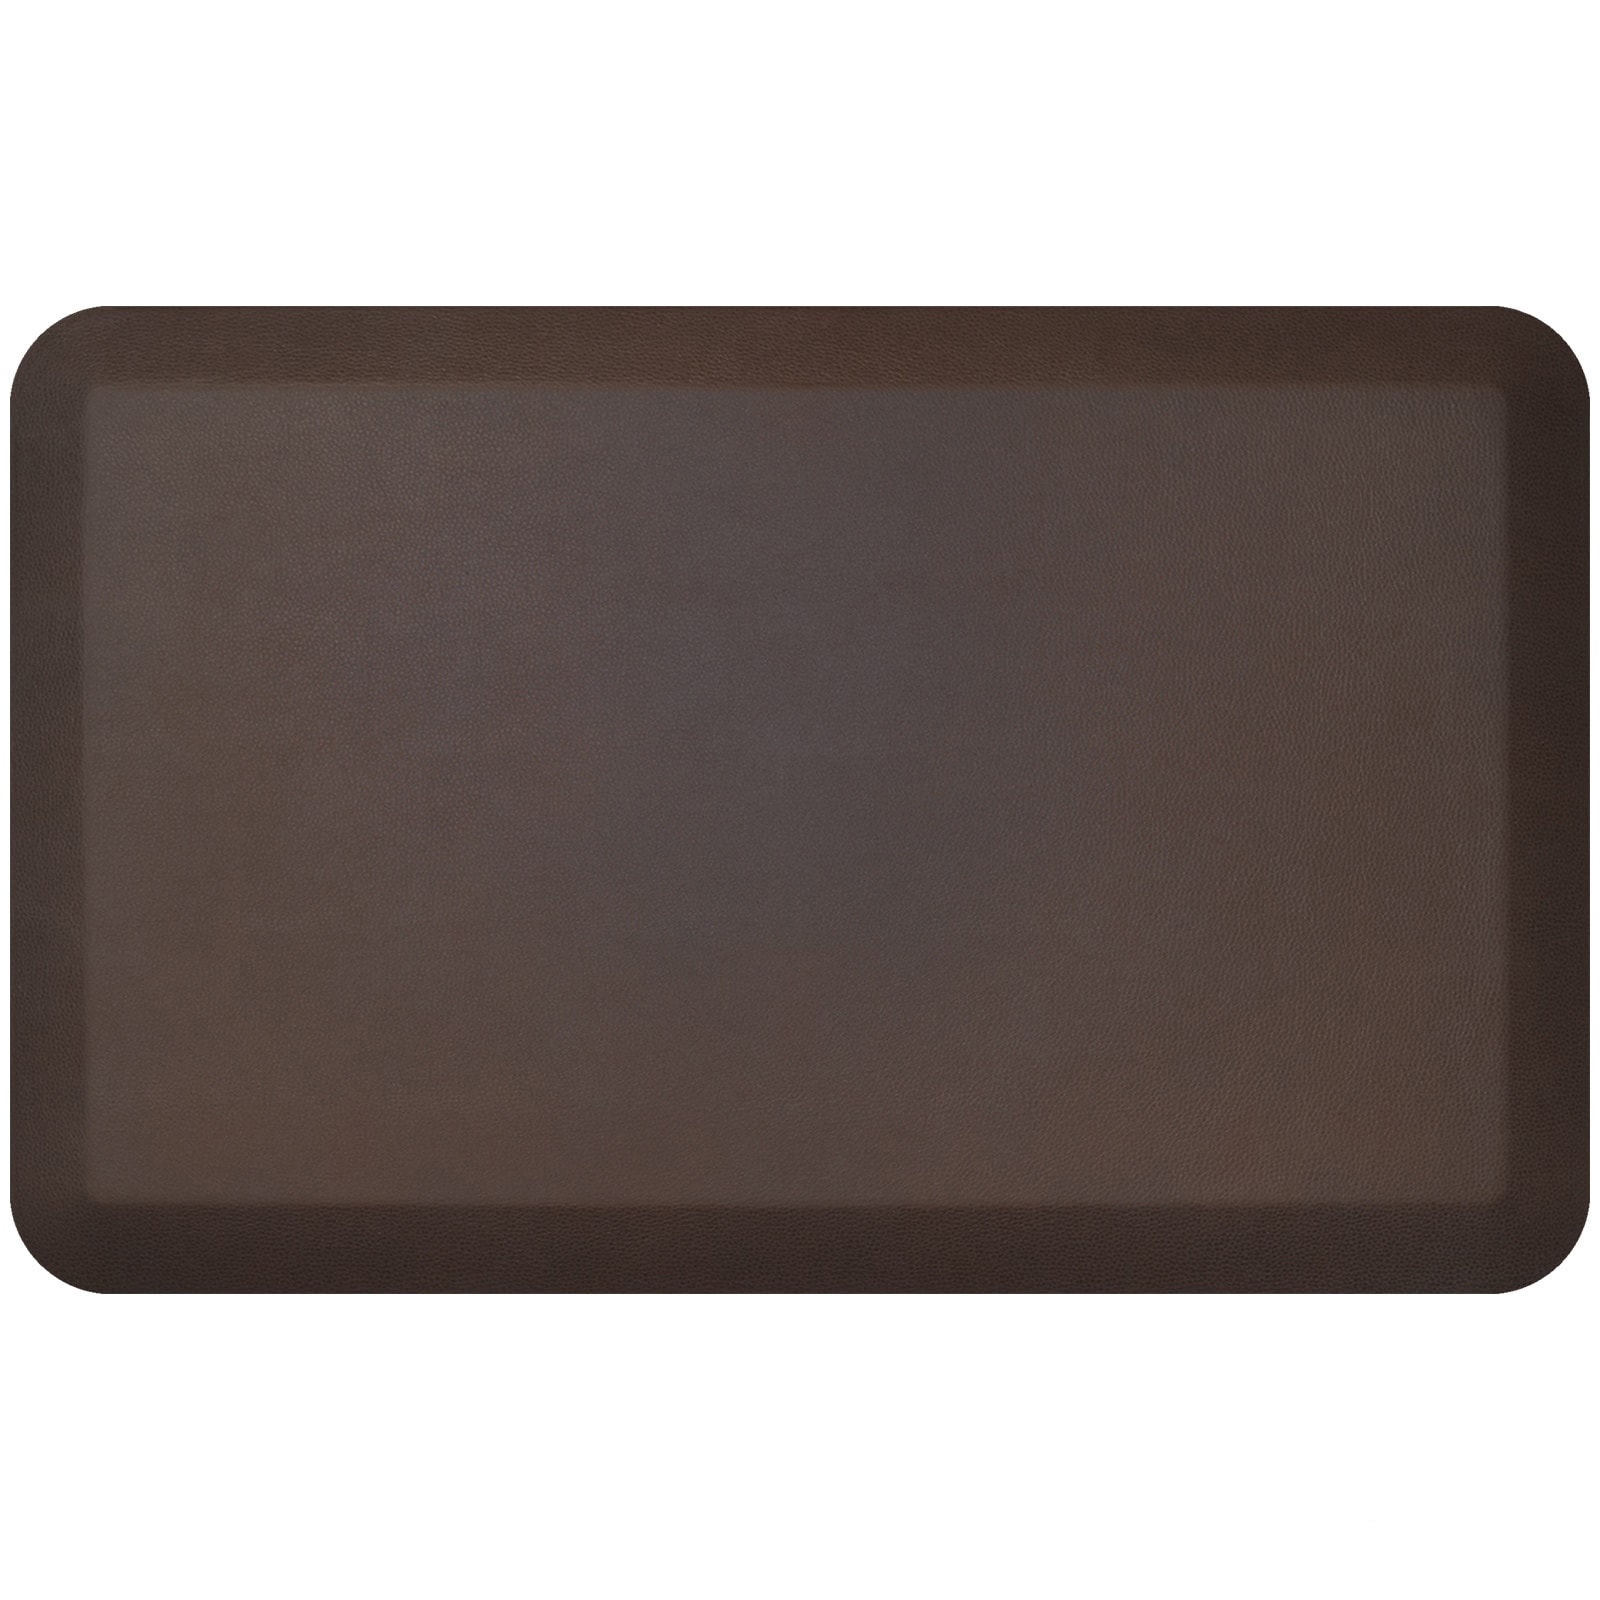 GelPro Newlife Designer Leather Grain Truffle 20 in. x 48 in. Anti-Fatigue Comfort Kitchen Mat